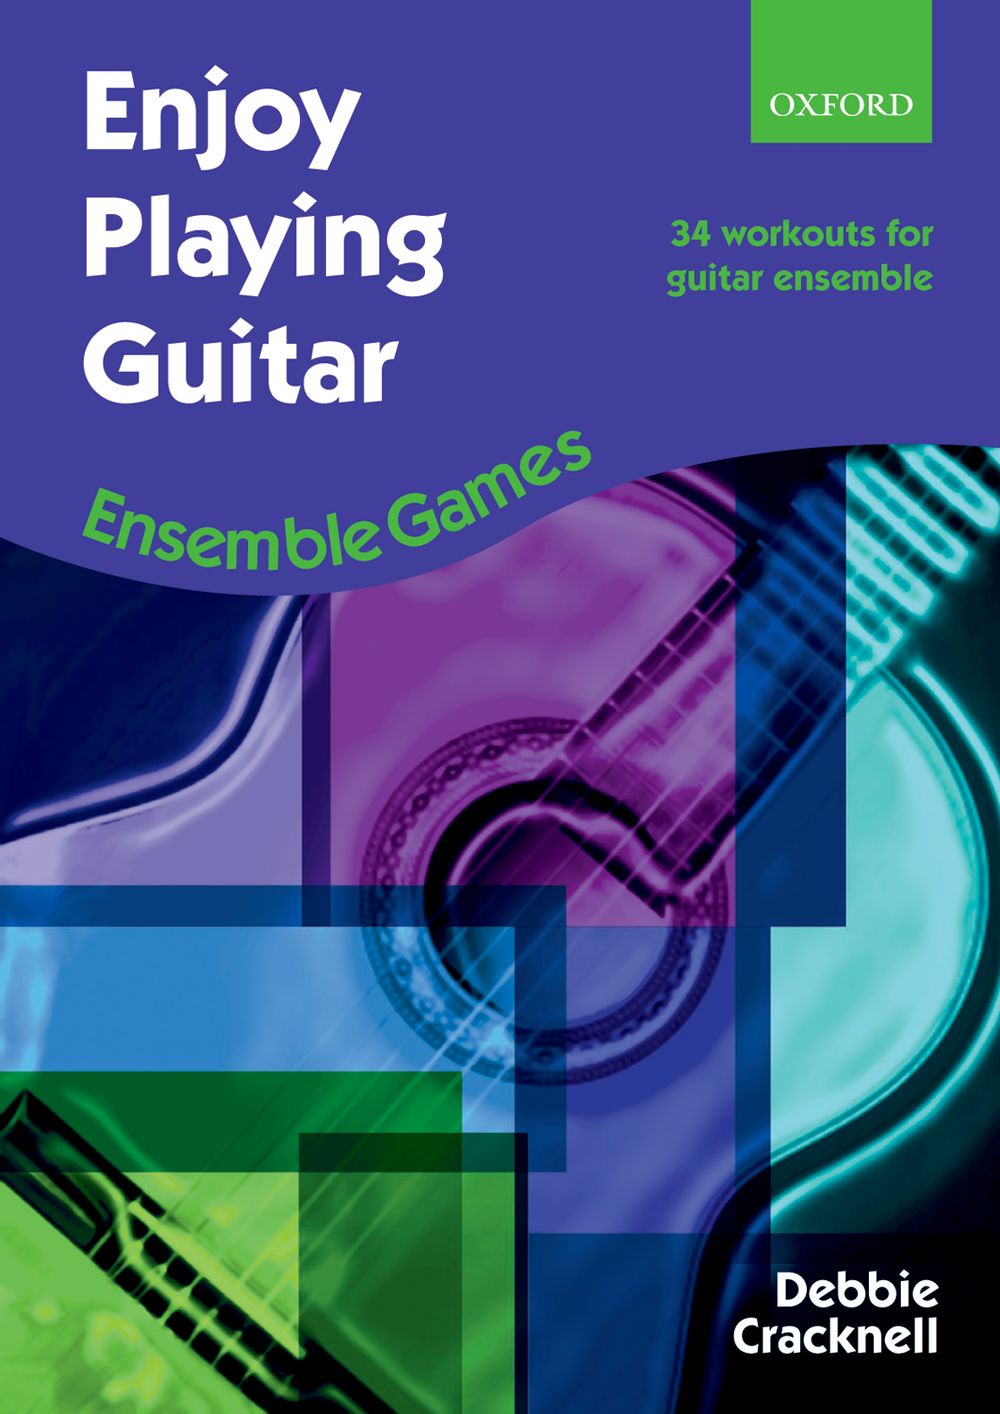 Cracknell: Enjoy Playing Guitar Ensemble Games: Guitar: Instrumental Album